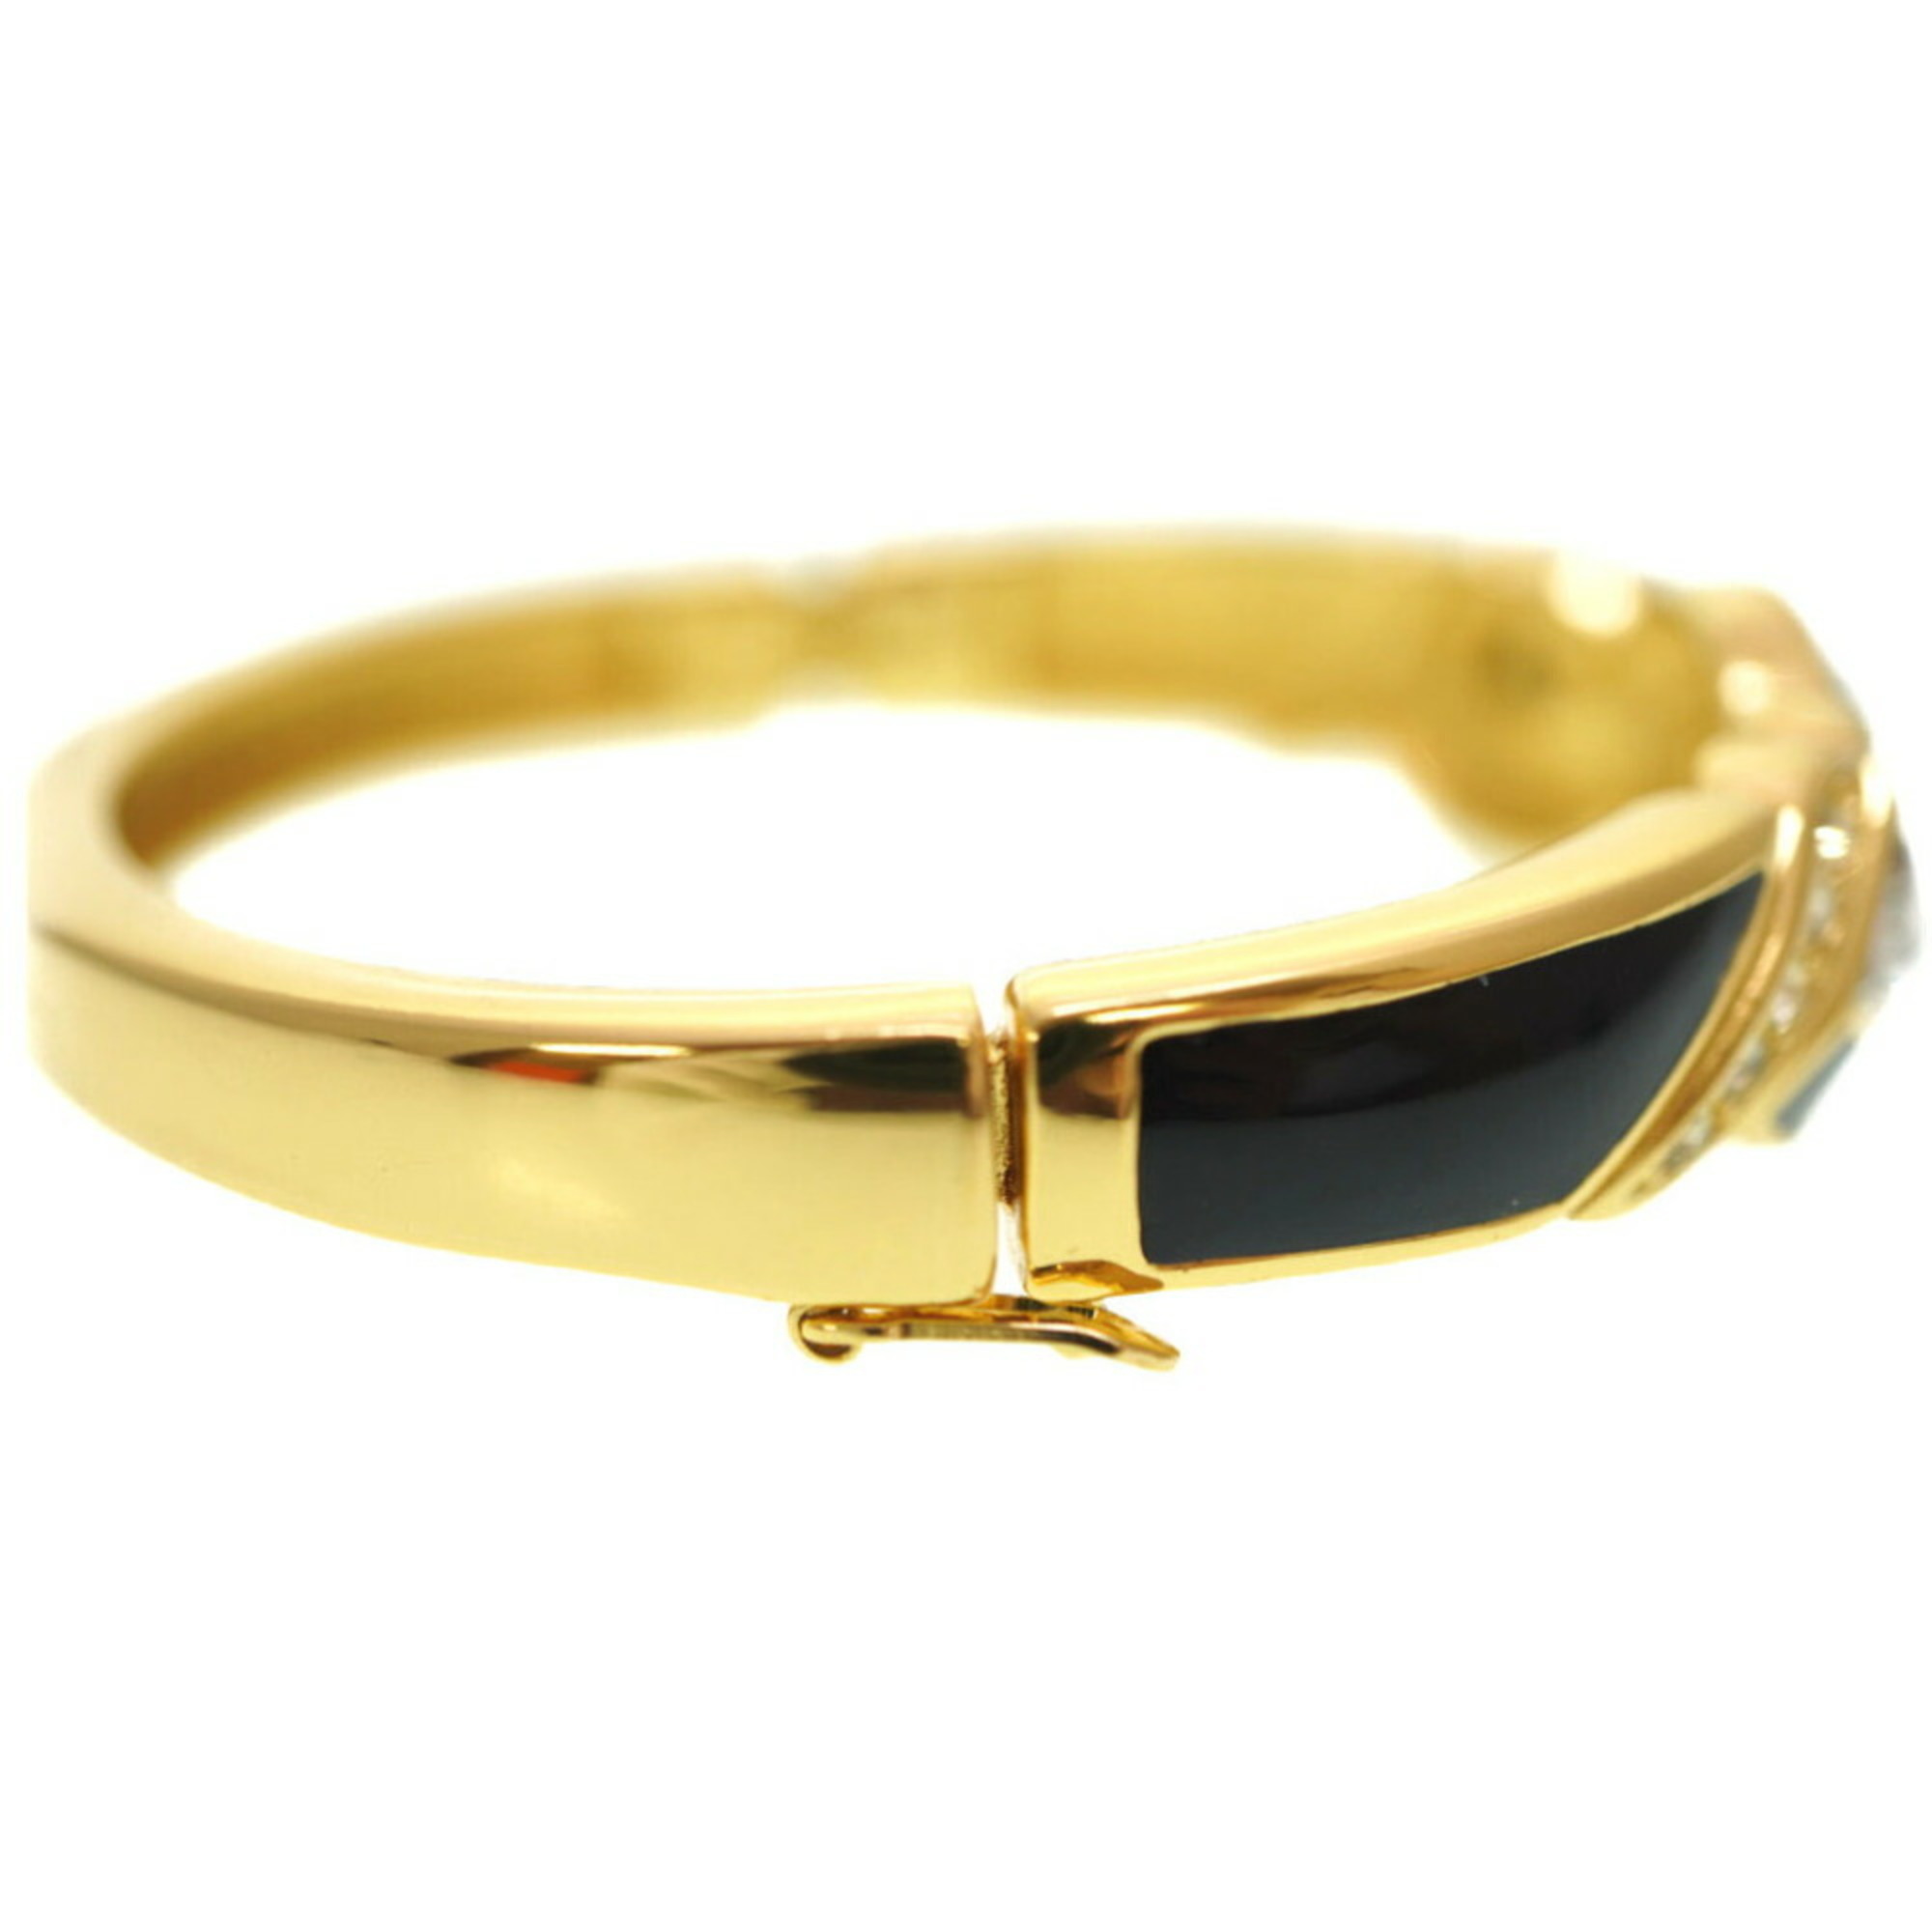 Christian Dior Dior stone bangle gold bracelet 0183Dior ladies